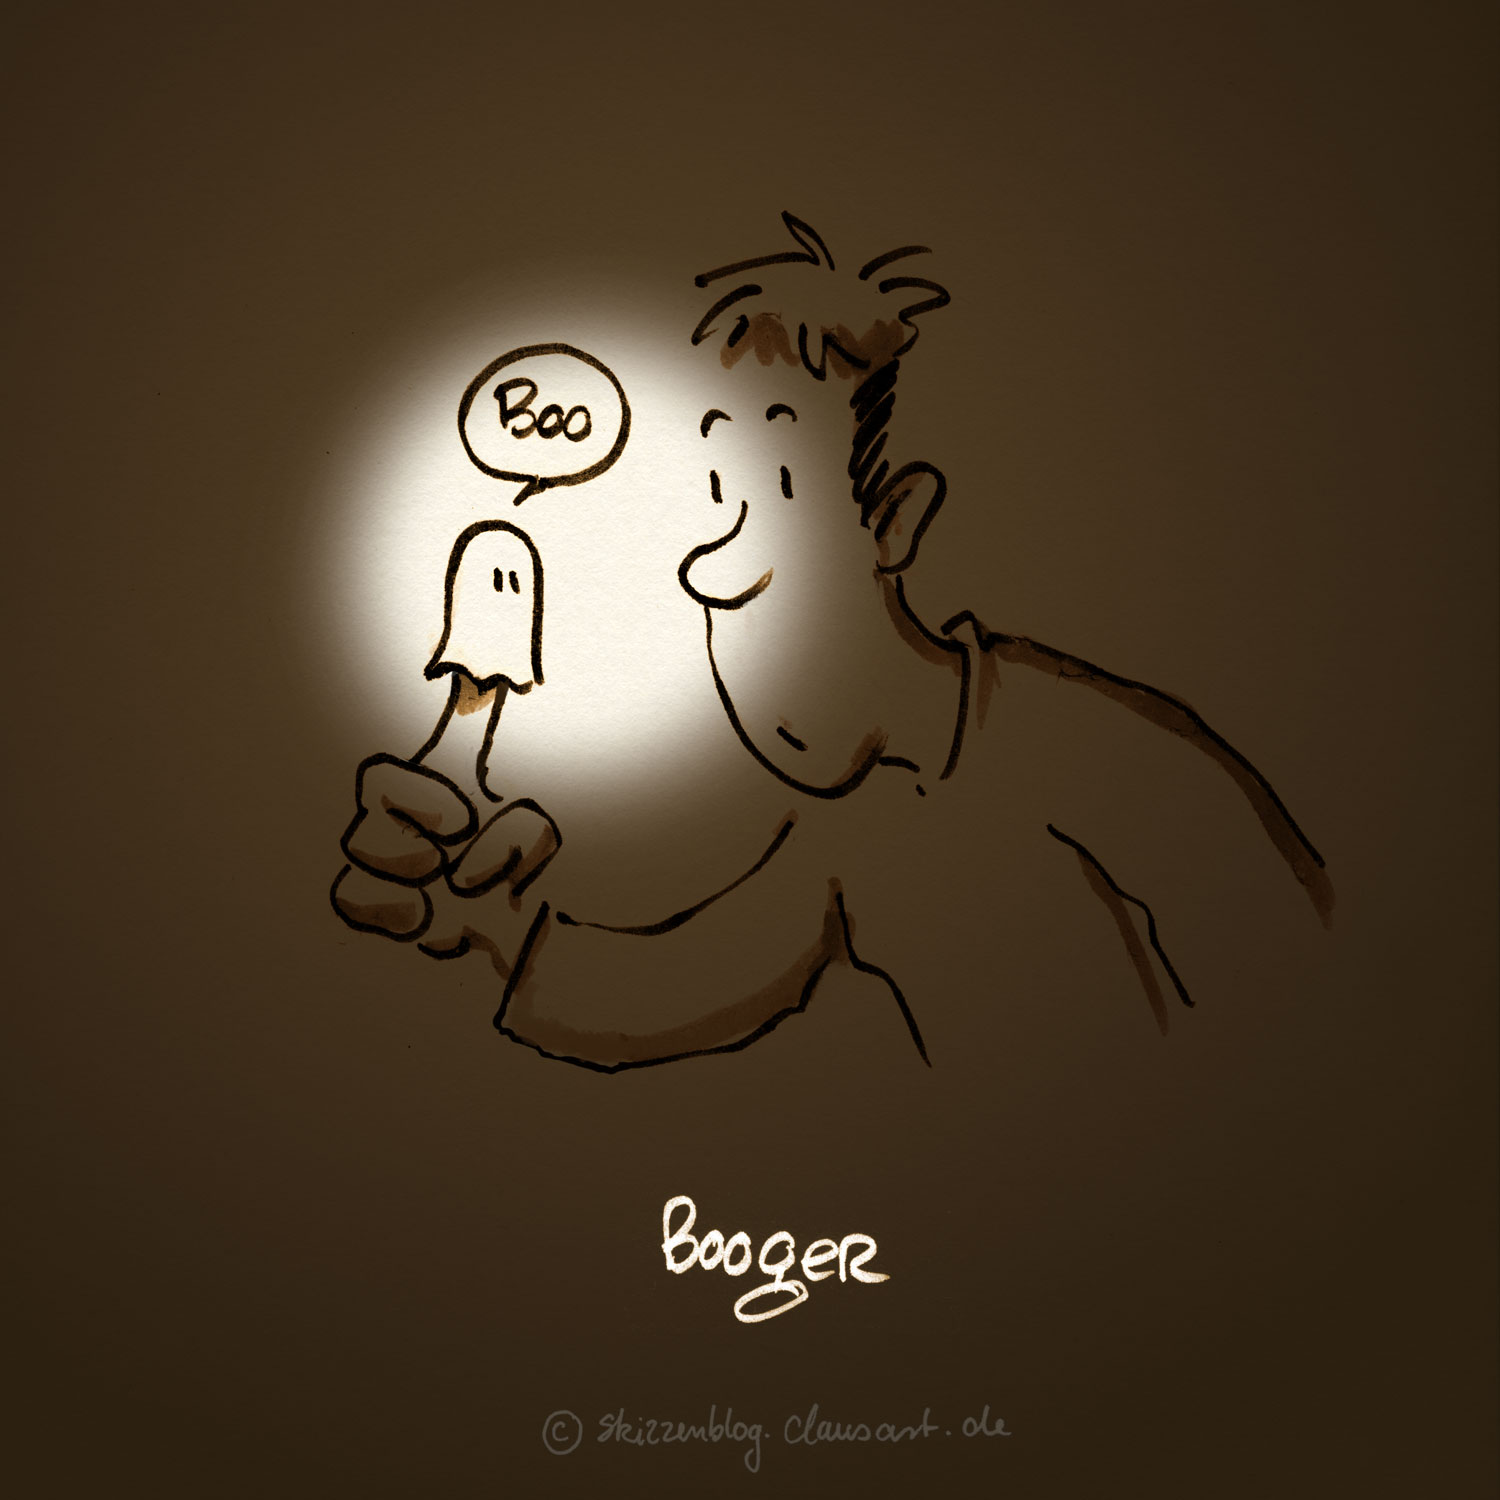 Booger-Boo!